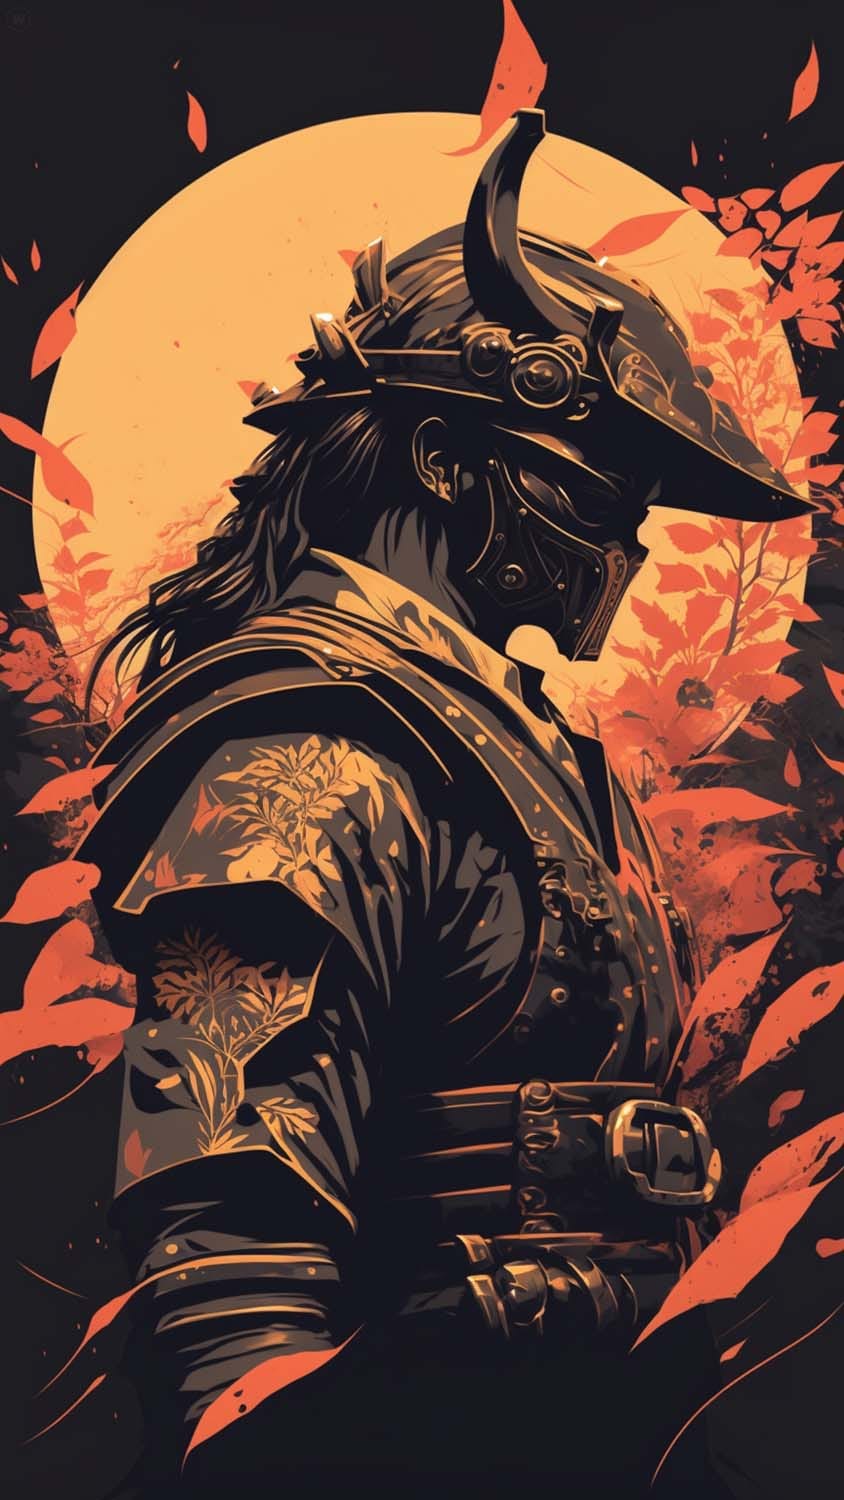 Samurai Background Images  Free Download on Freepik